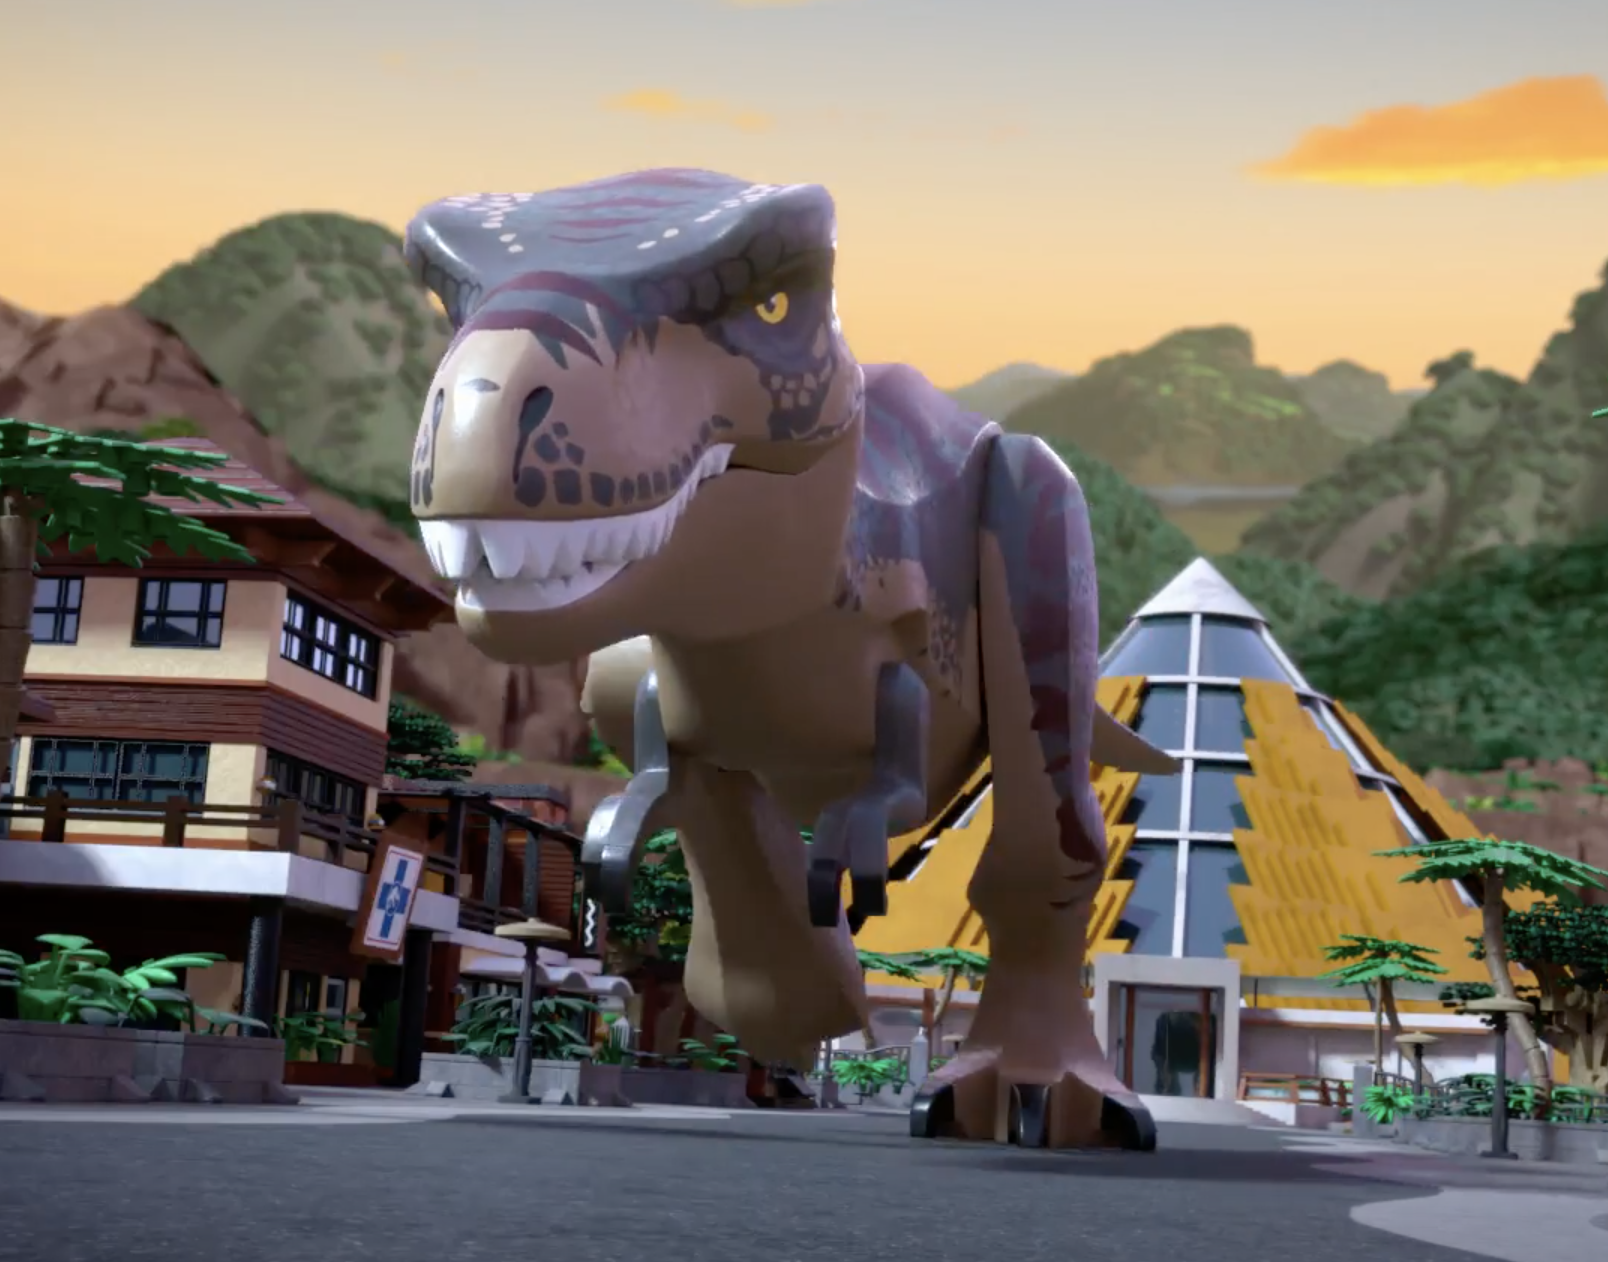 Lego Jurassic World: Legend of Isla Nublar - Wikipedia